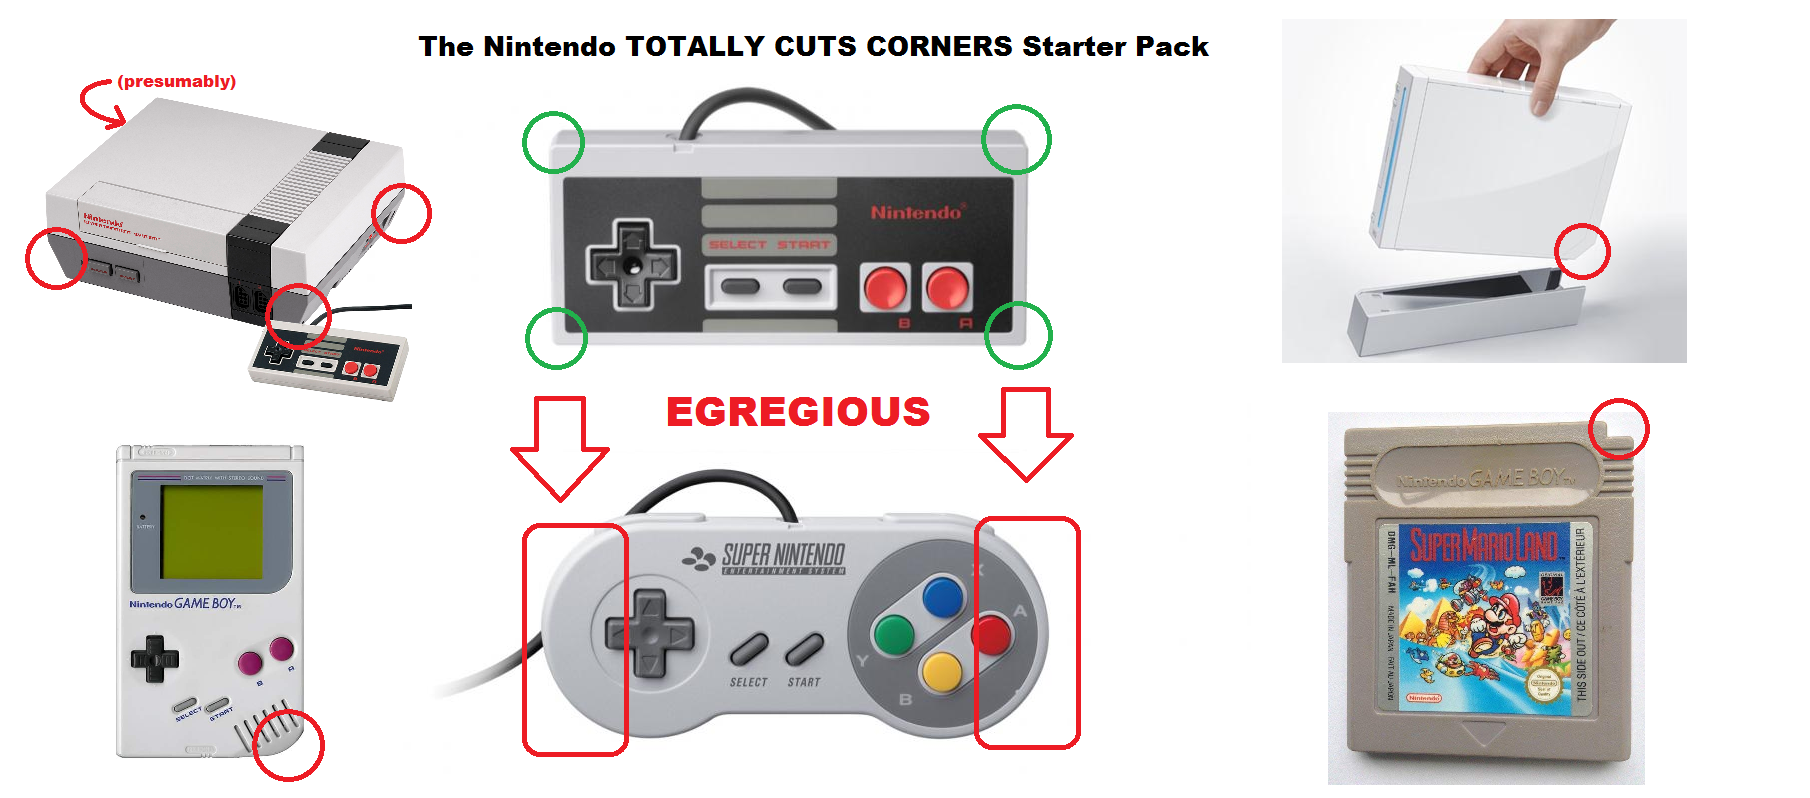 Nintendo Found Cutting Corners